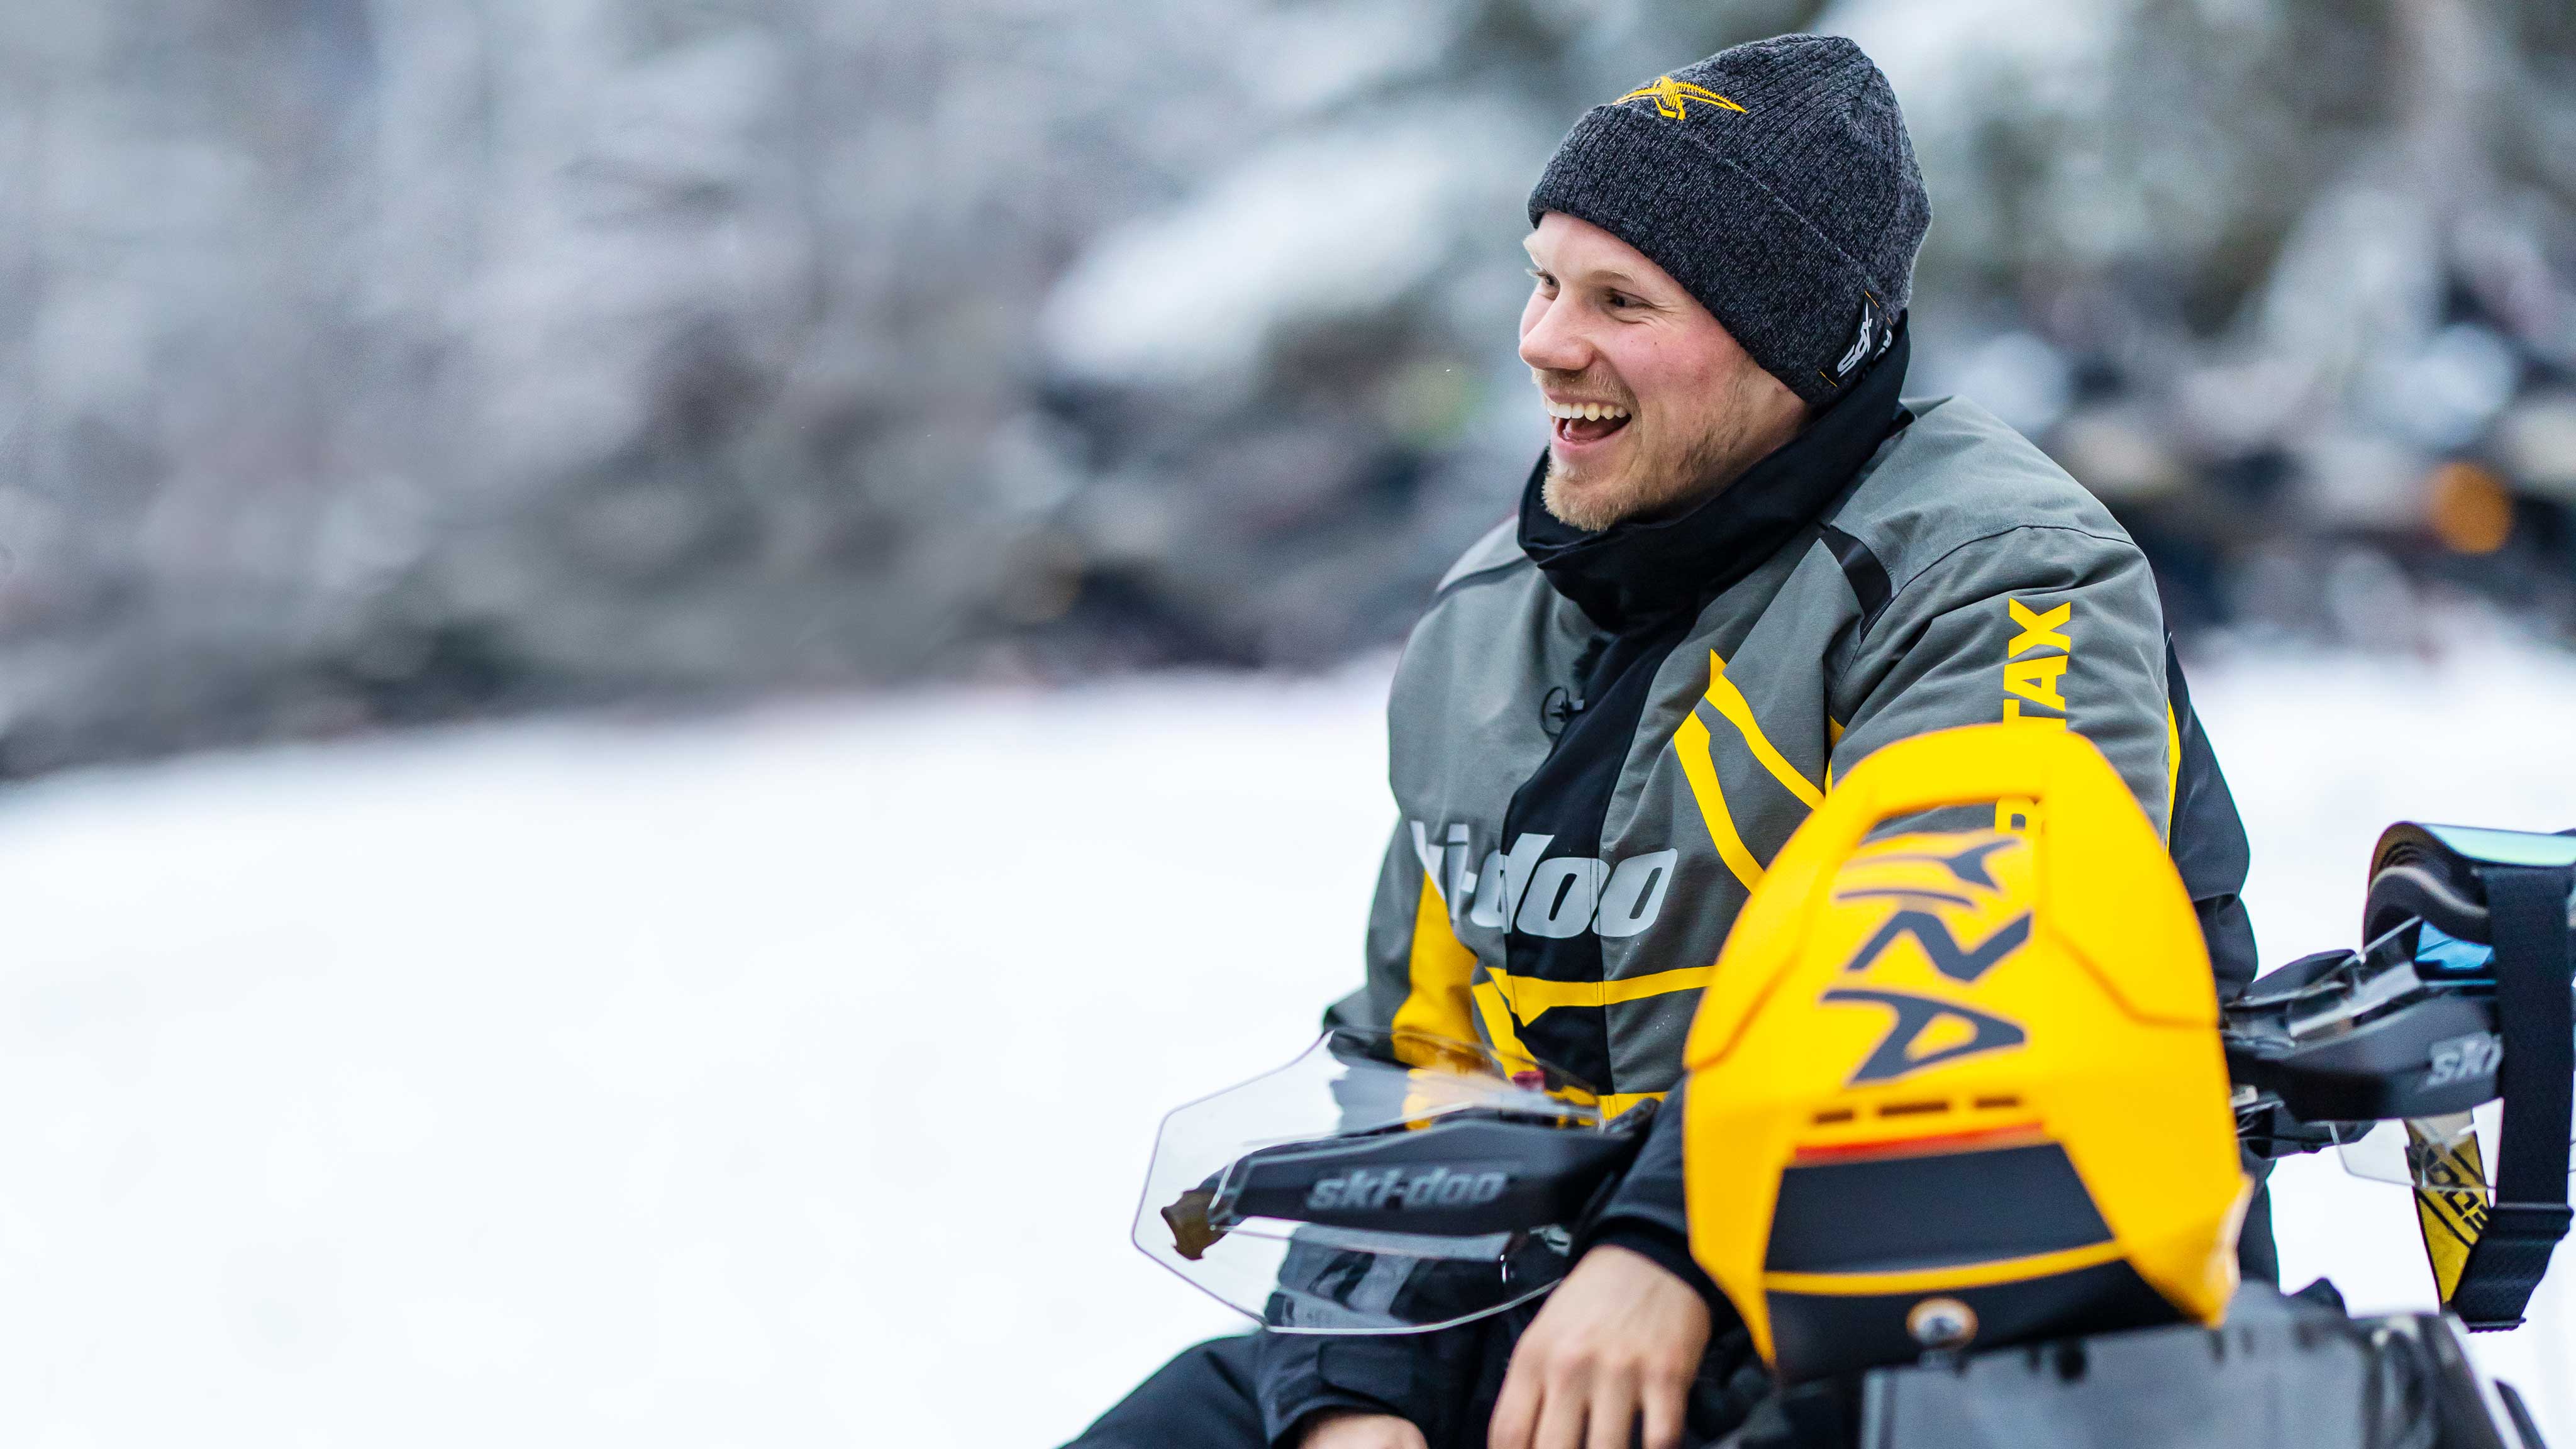 Man sitting on his Ski-Doo sled wearing the X-Team Jacket